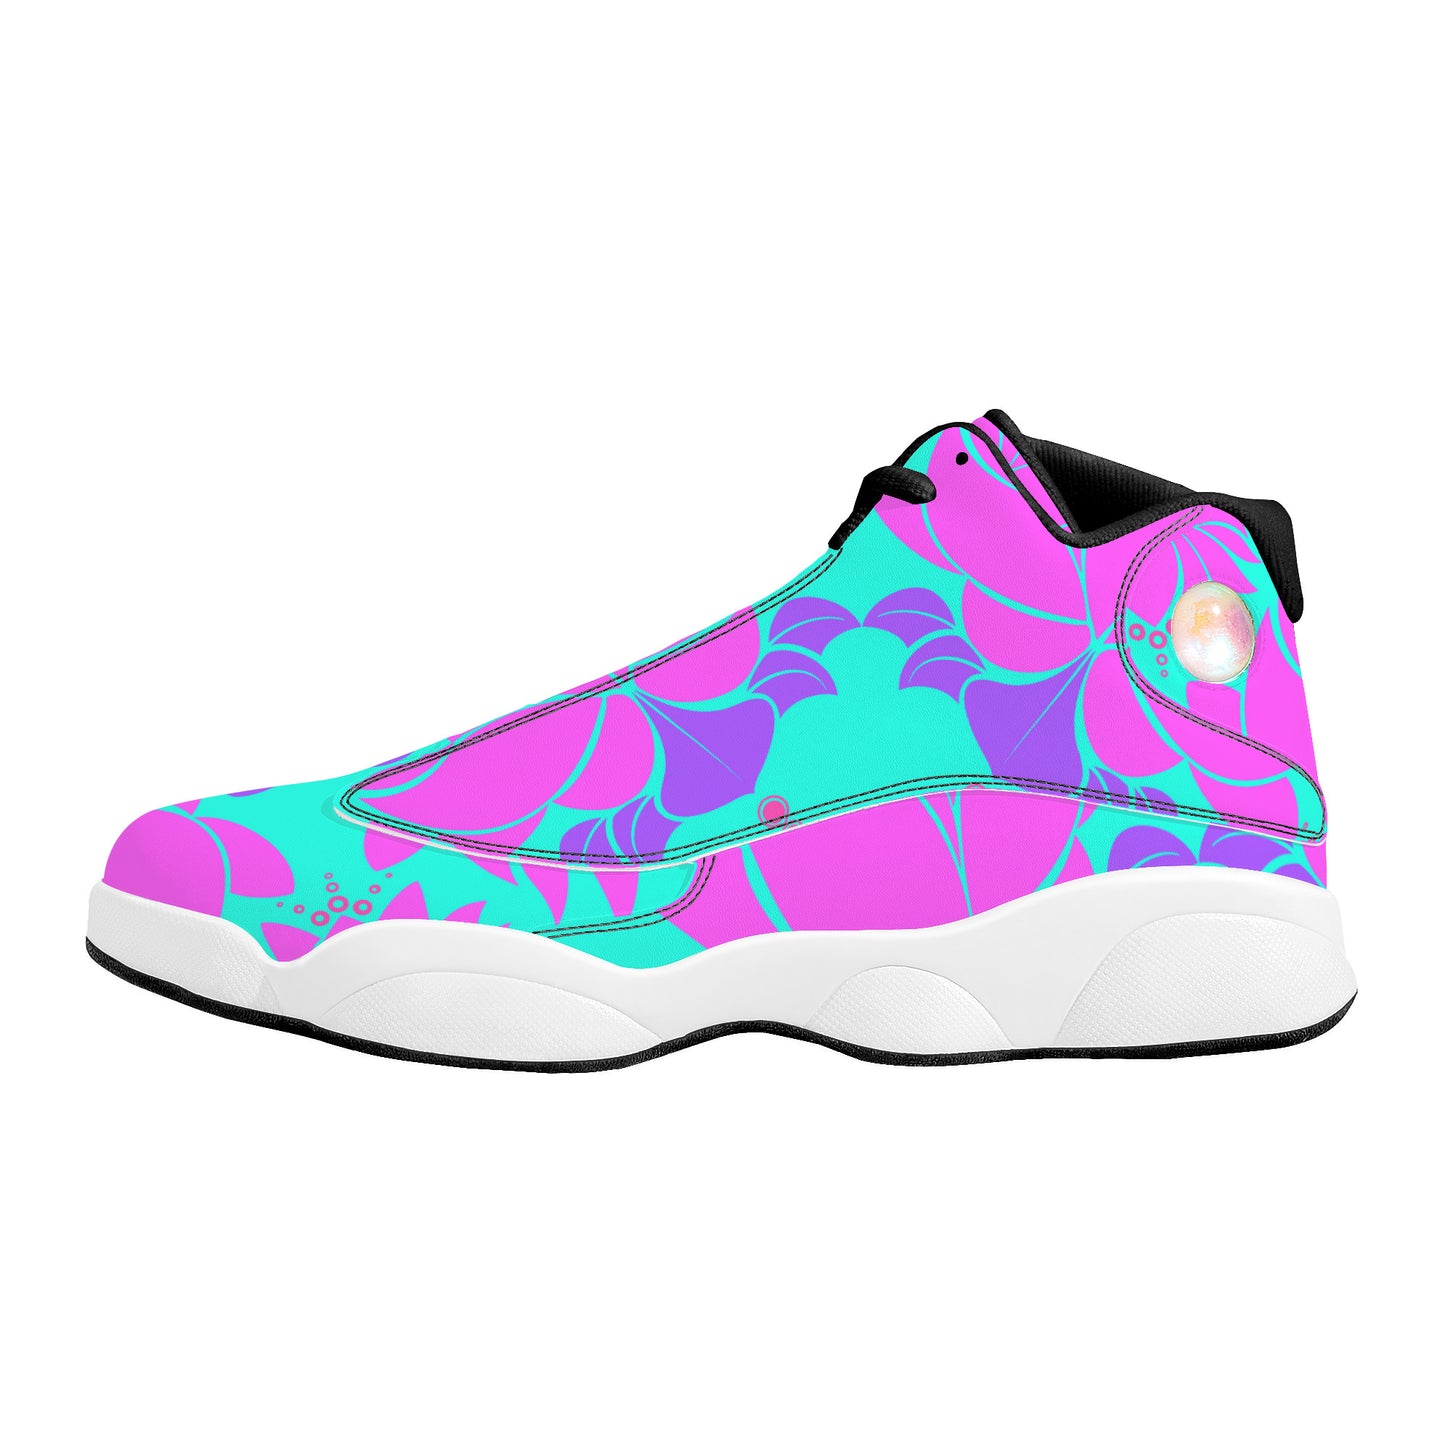 "Lotus" Basketball Shoes